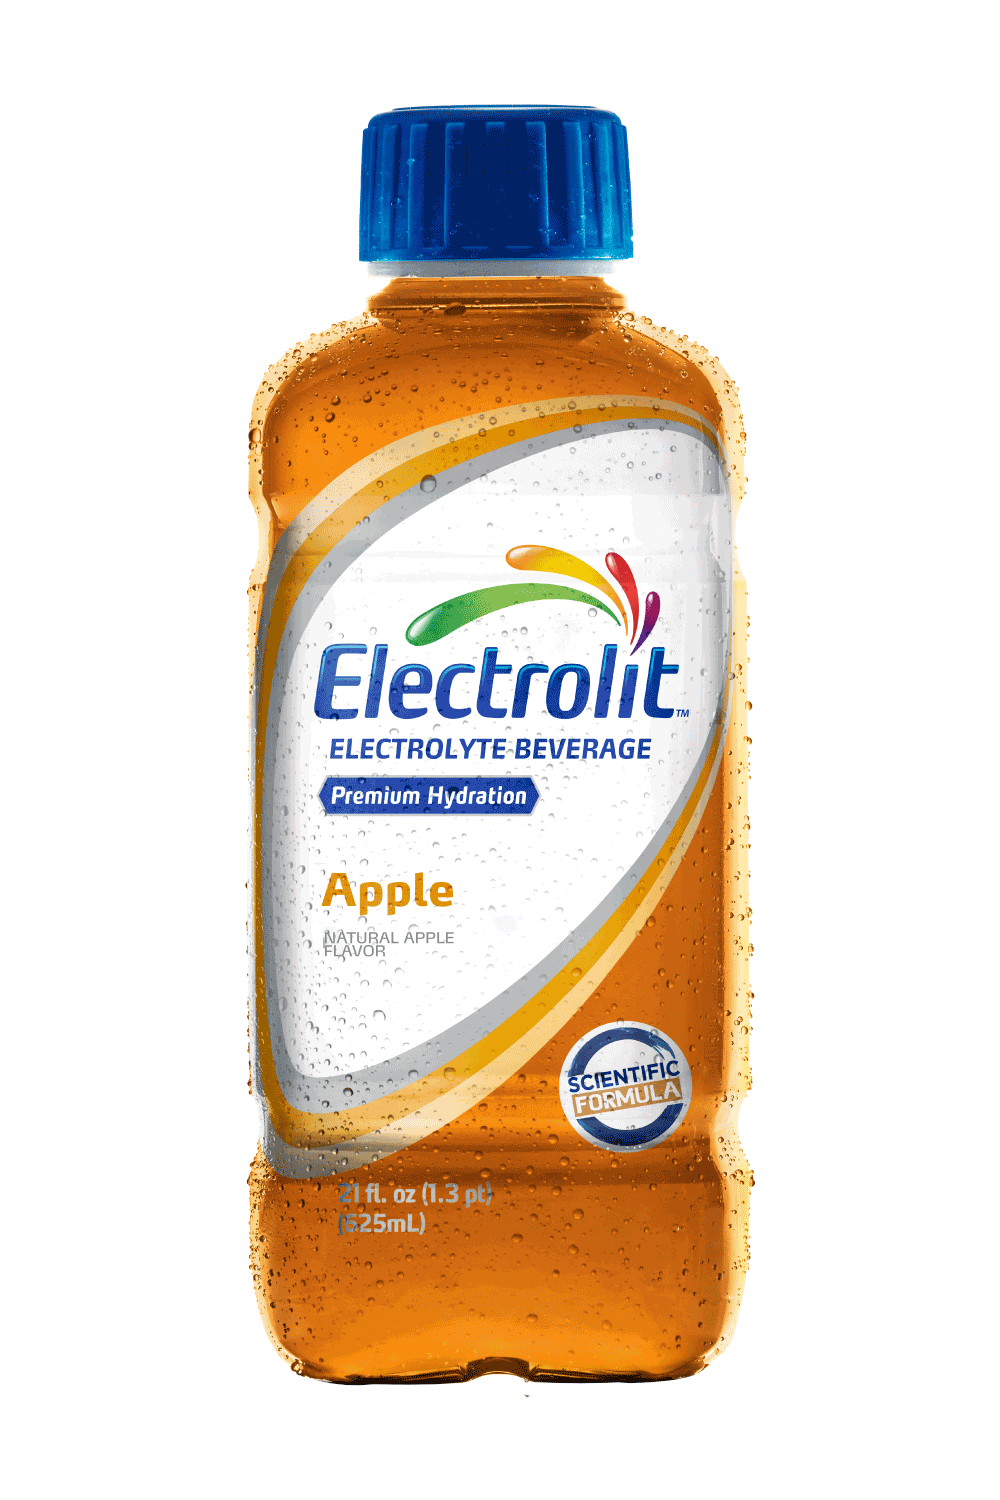 Brand: Electrolit